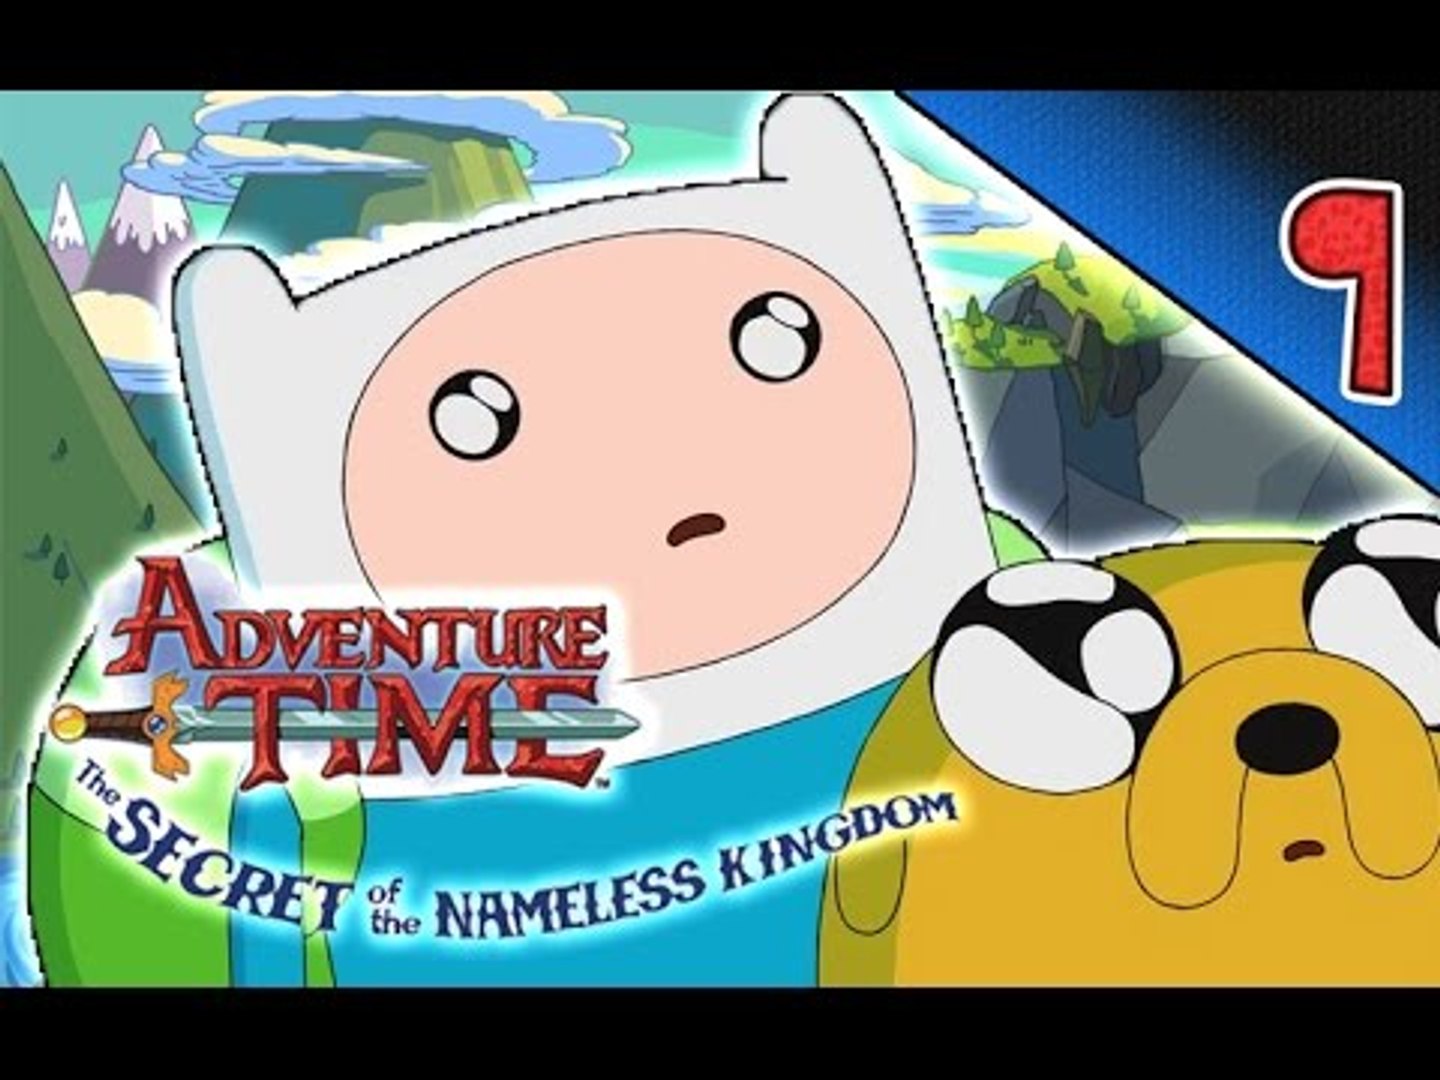 Adventure time secret of the nameless kingdom steam фото 101